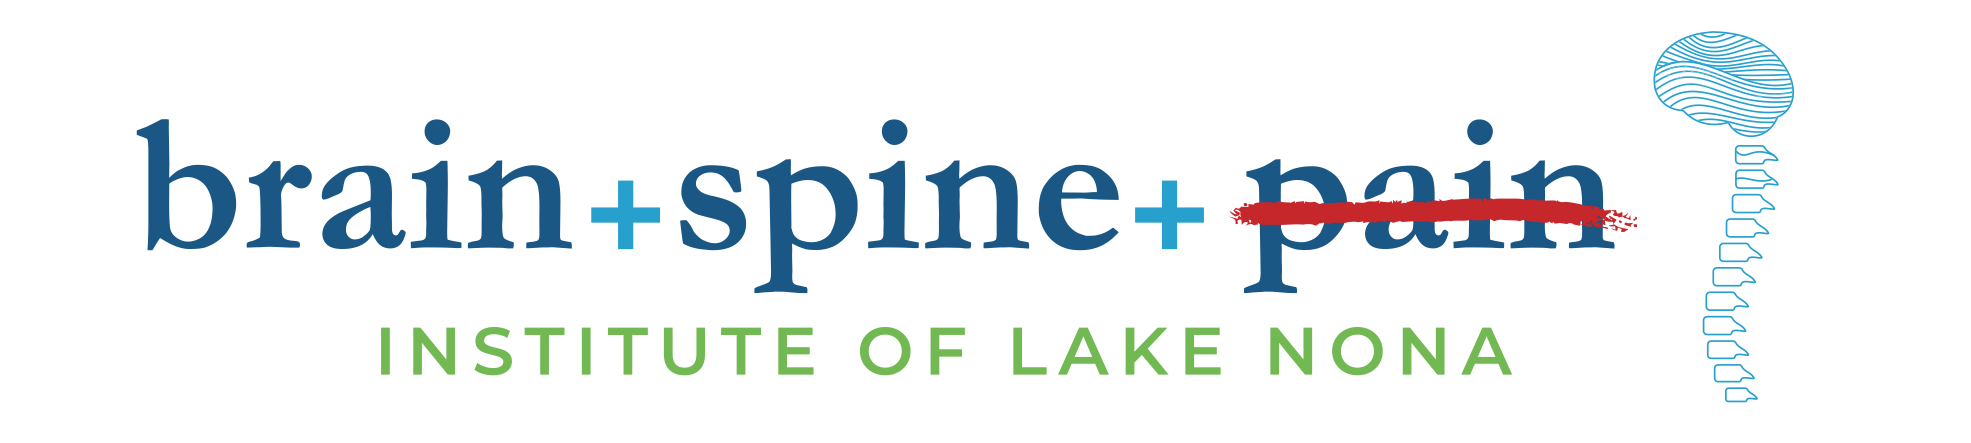 Brain Spine Pain Institute of Lake Nona logo